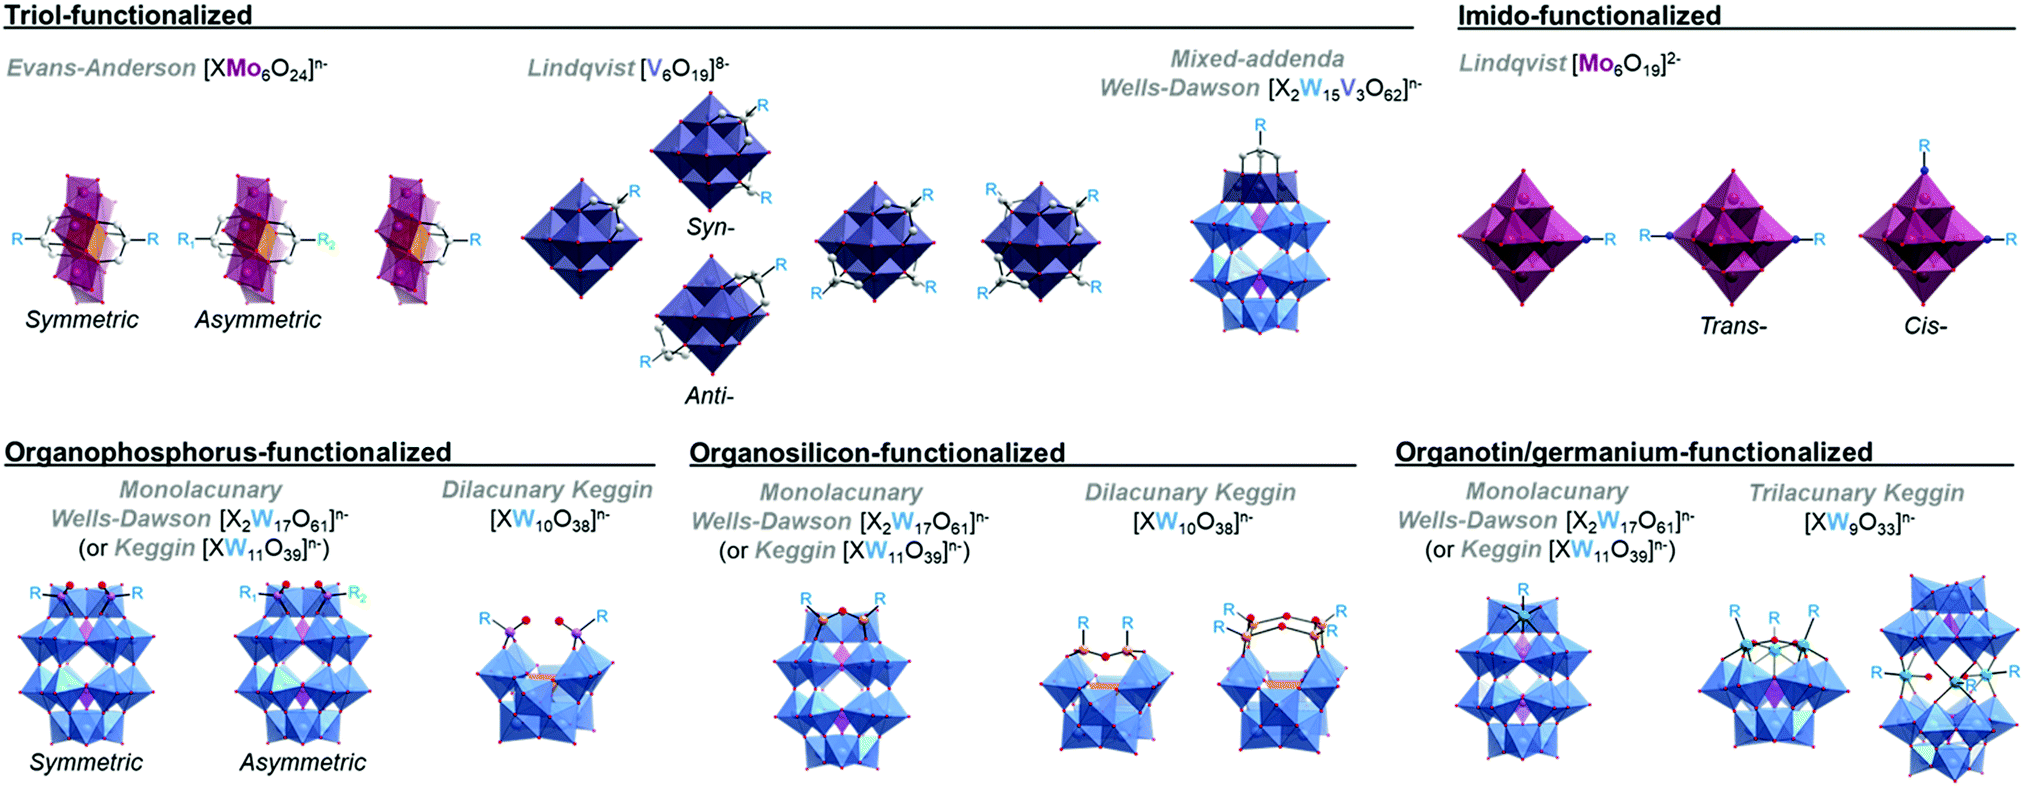 Supramolecular assemblies of organo-functionalised hybrid functional building blocks to hierarchical nanomaterials - Chemical Reviews (RSC Publishing)